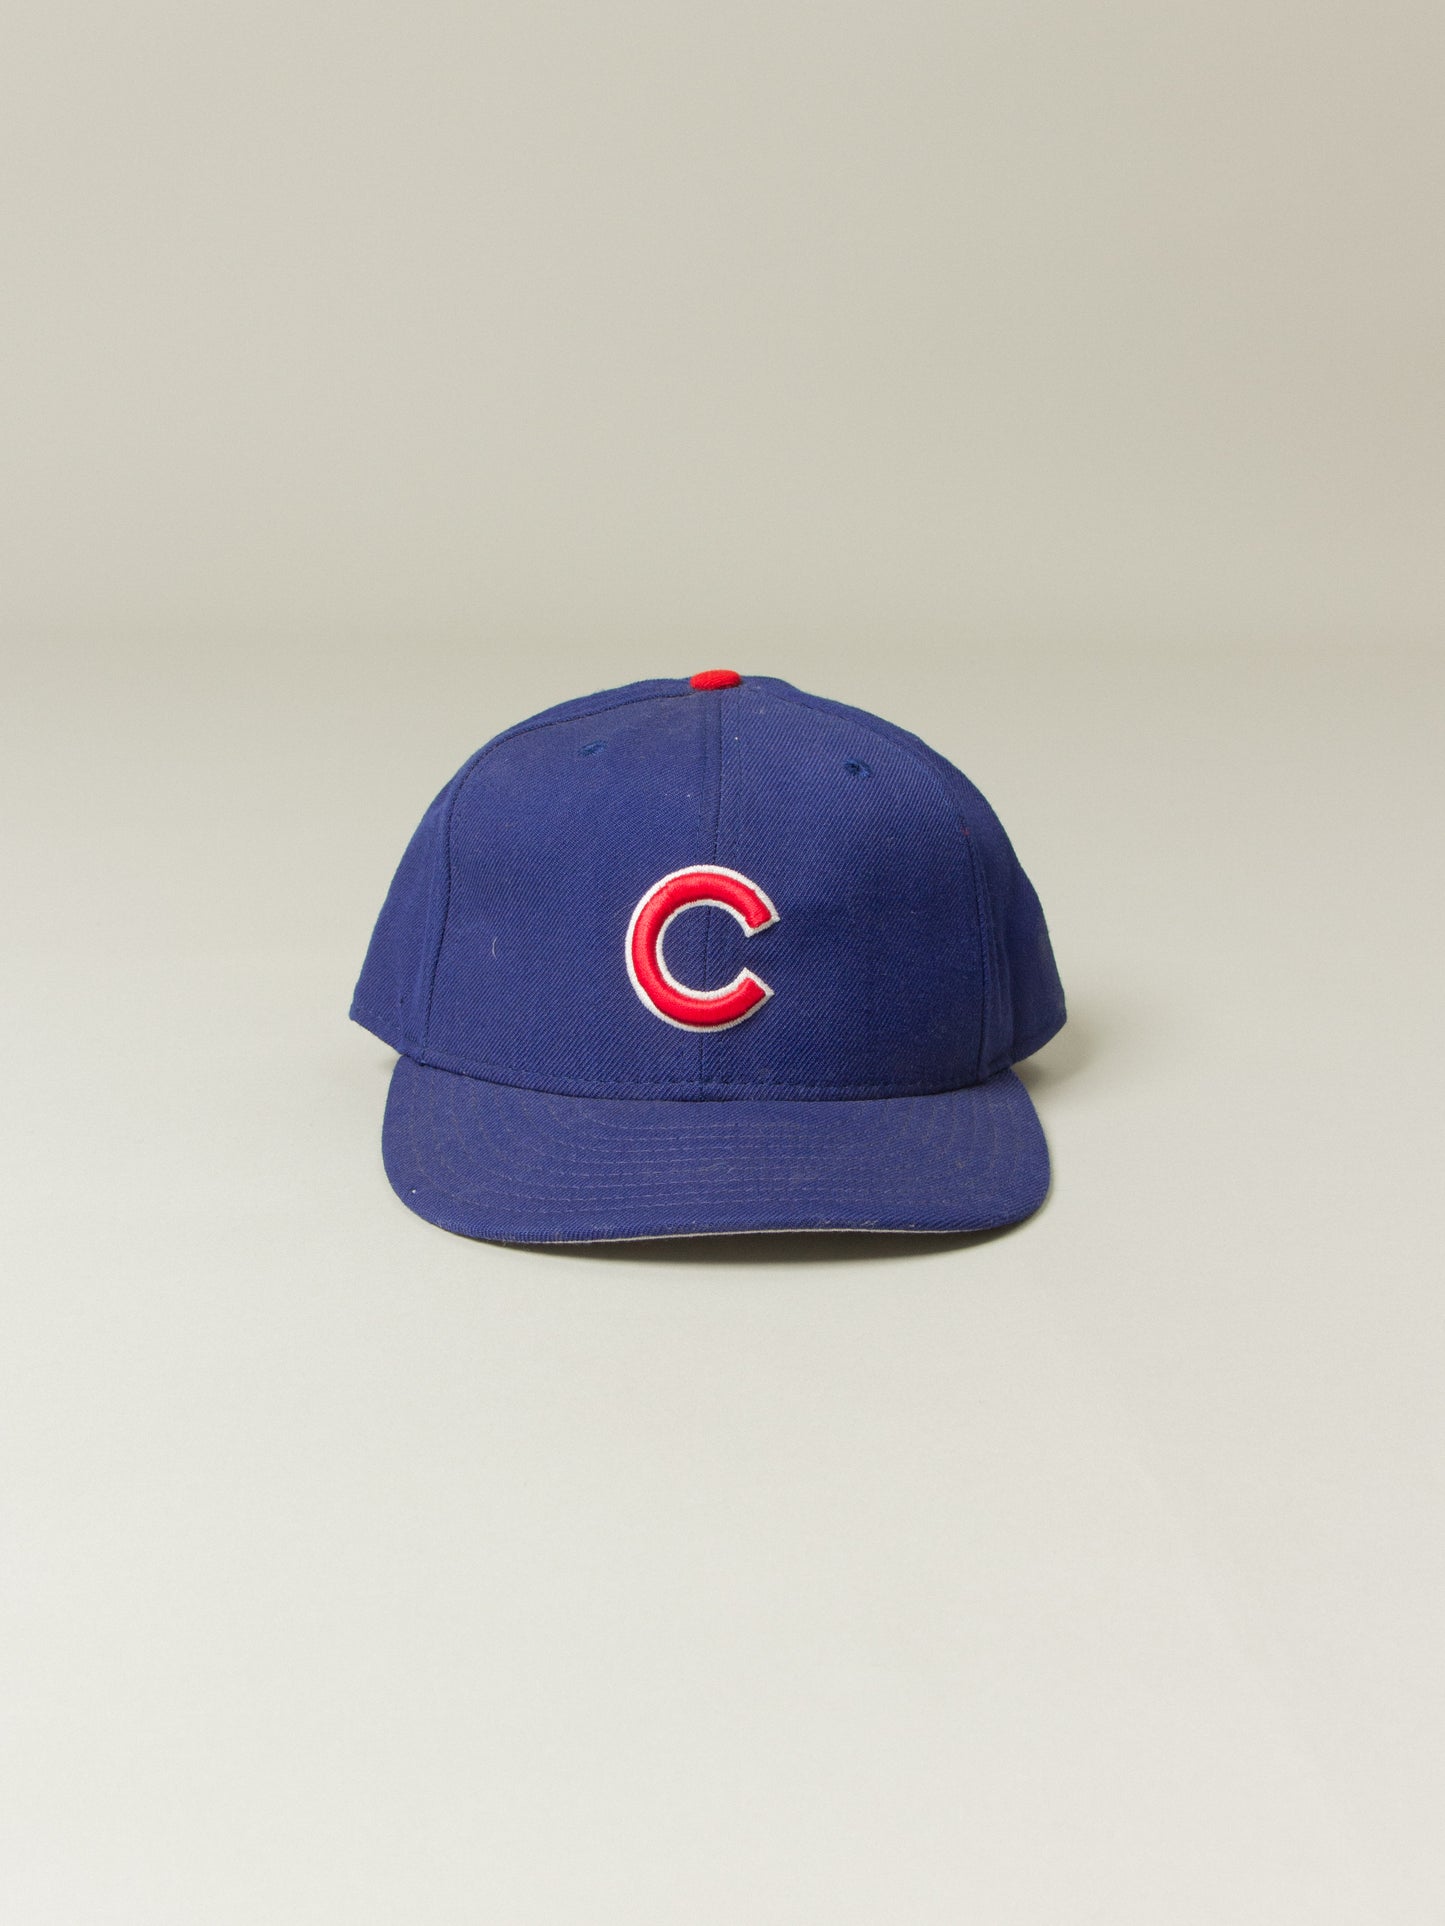 Vtg 1990s New Era Chicago Cubs Baseball Cap - Made in USA (7 5/8)